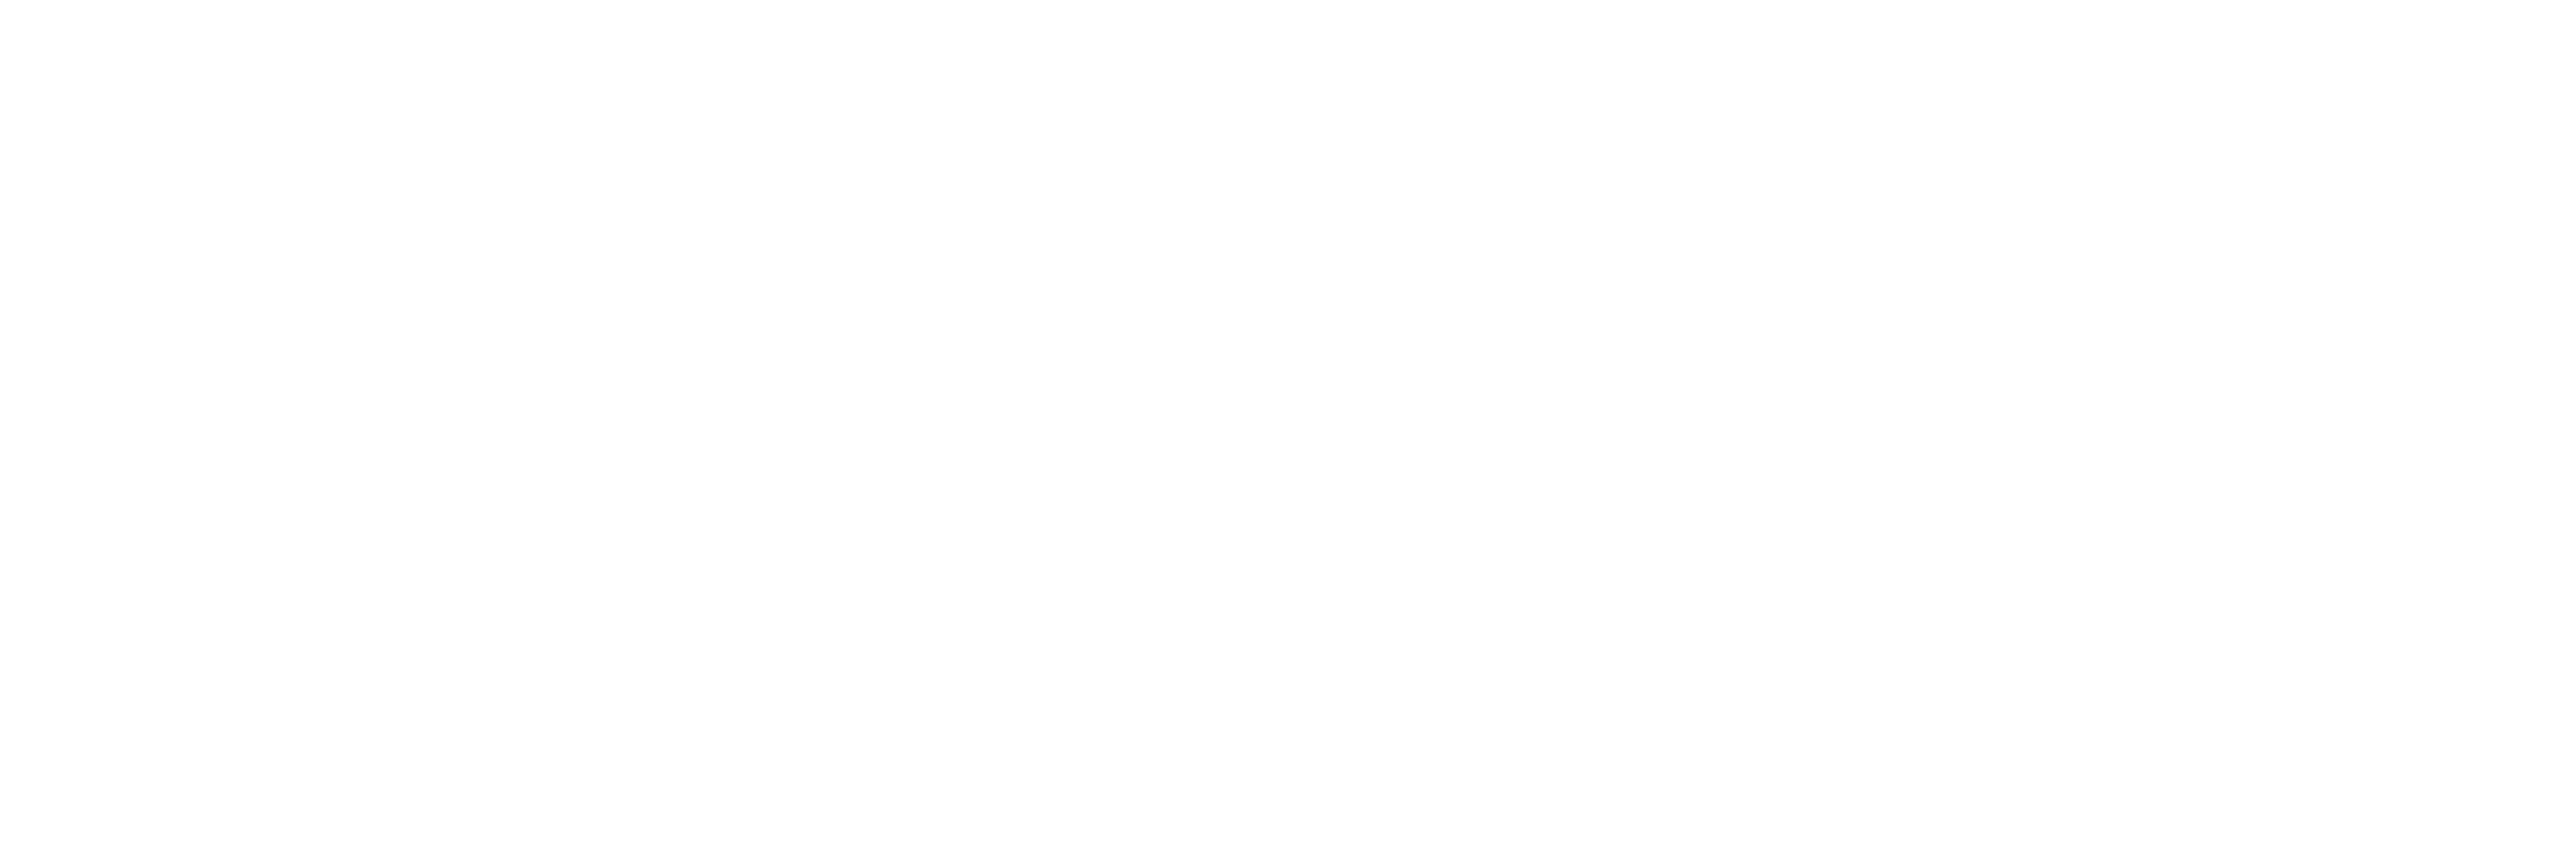 Cloiff Fashion